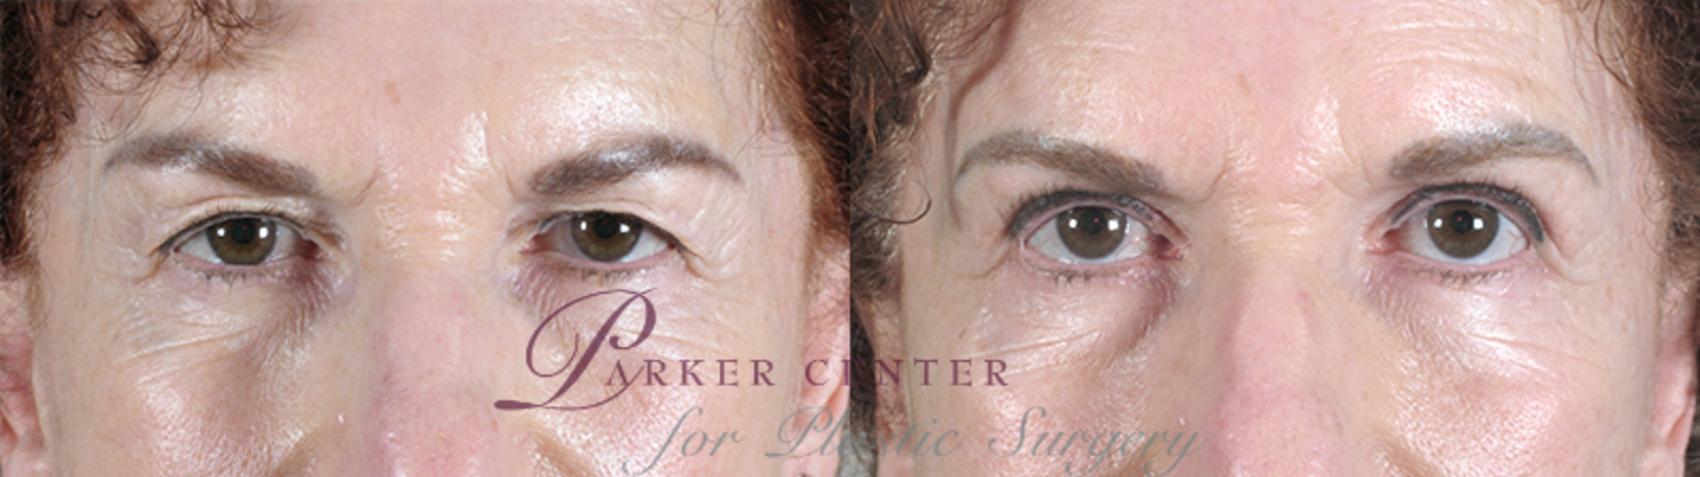 Eyelid Lift Case 61 Before & After View #1 | Paramus, NJ | Parker Center for Plastic Surgery